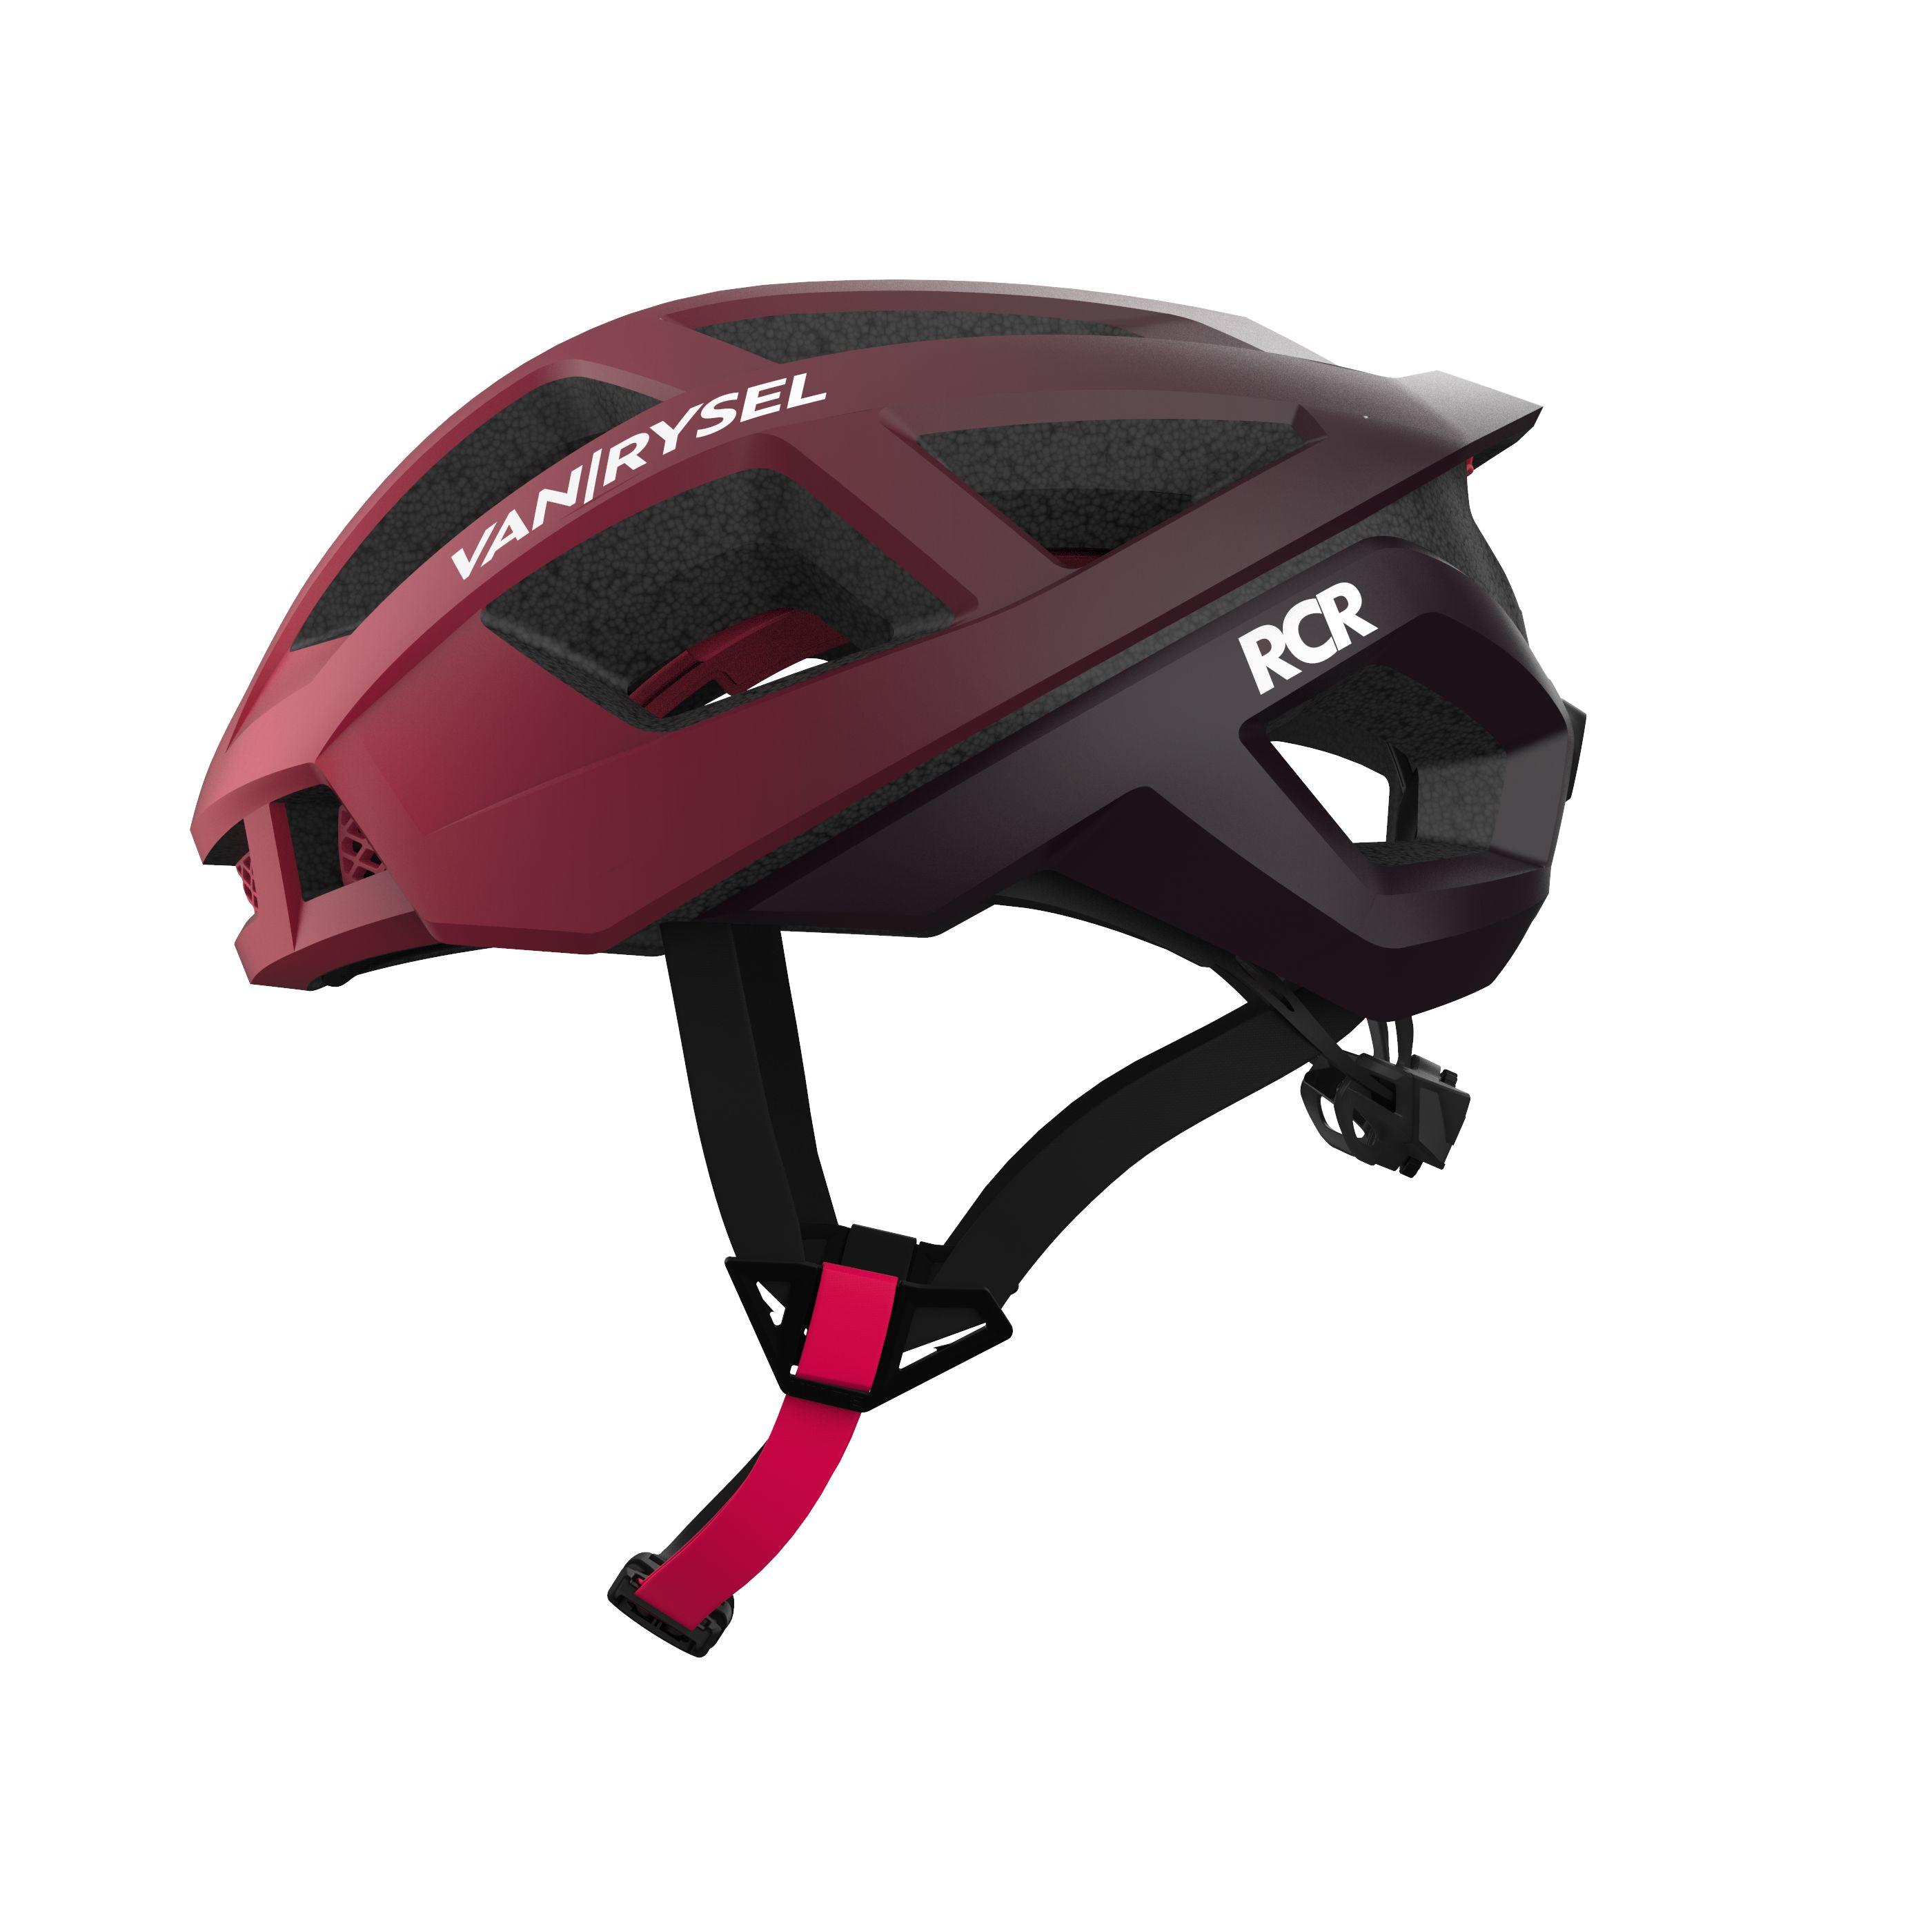 VAN RYSEL Racer 2019 Women's Cycling Helmet